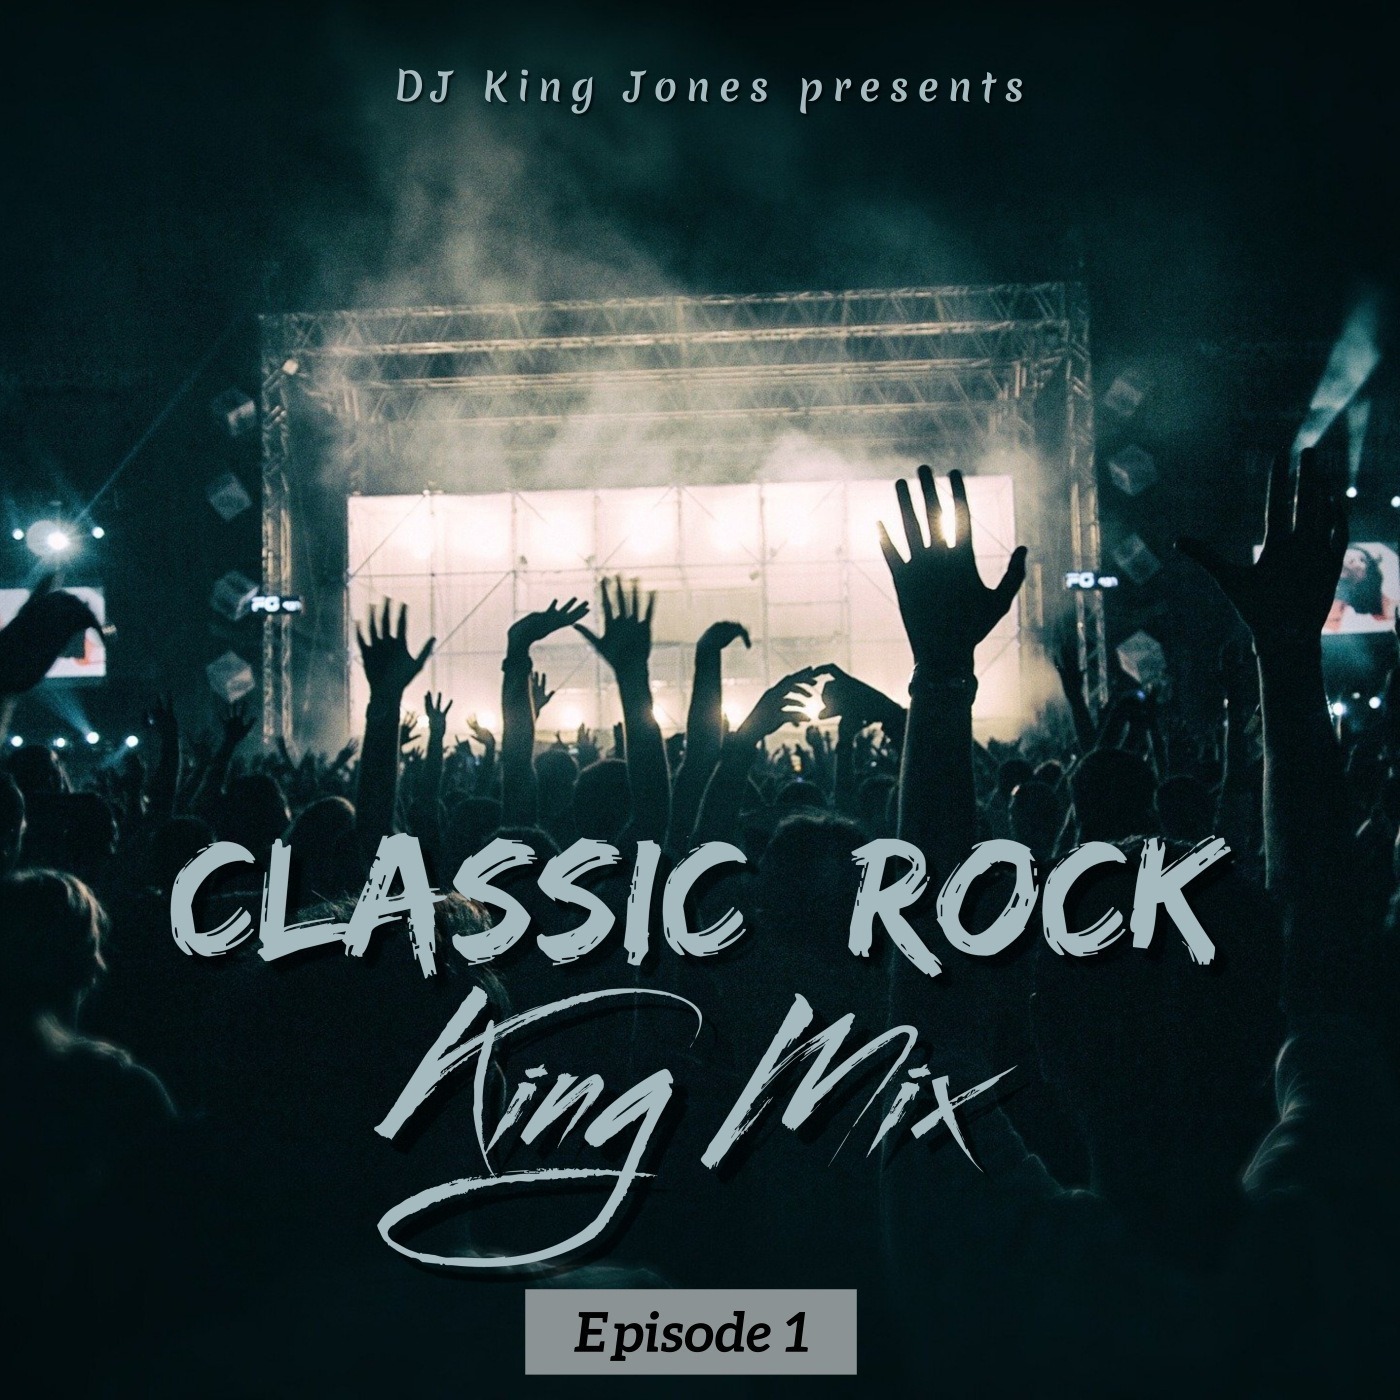 Classic Rock King Mix (Episode 1) Image